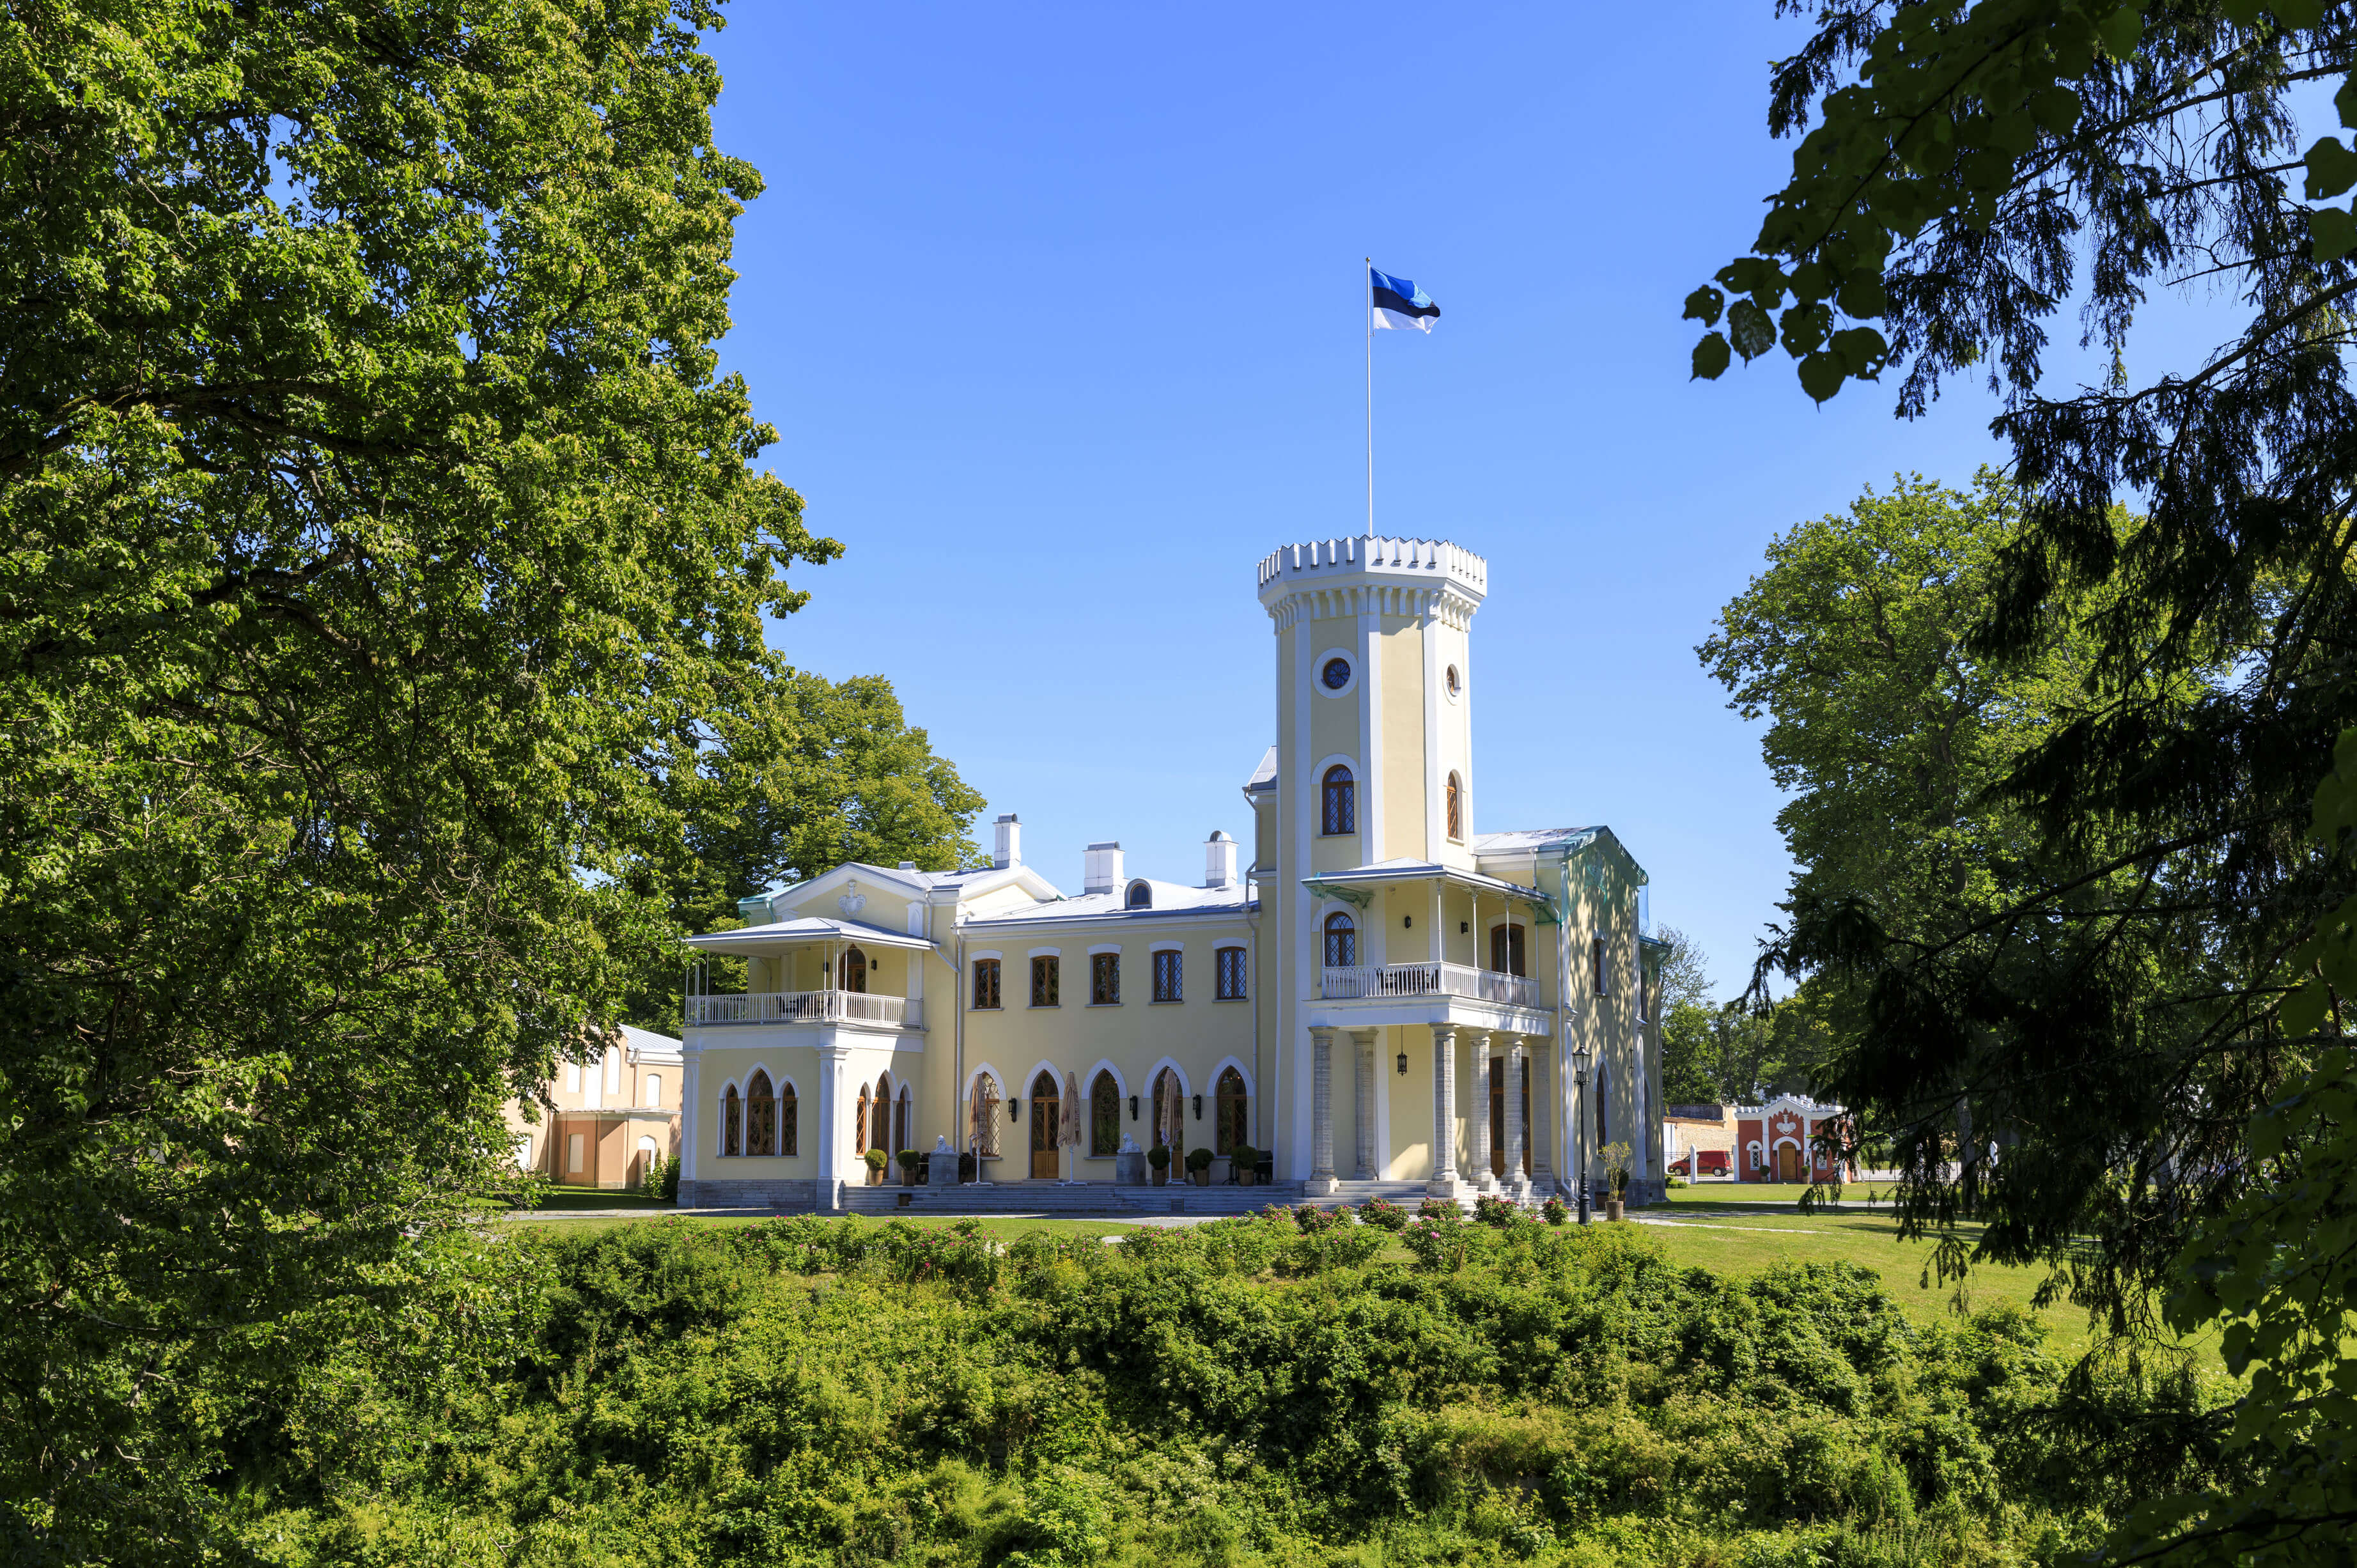 Castle or manor of Keila Joa in Estonia